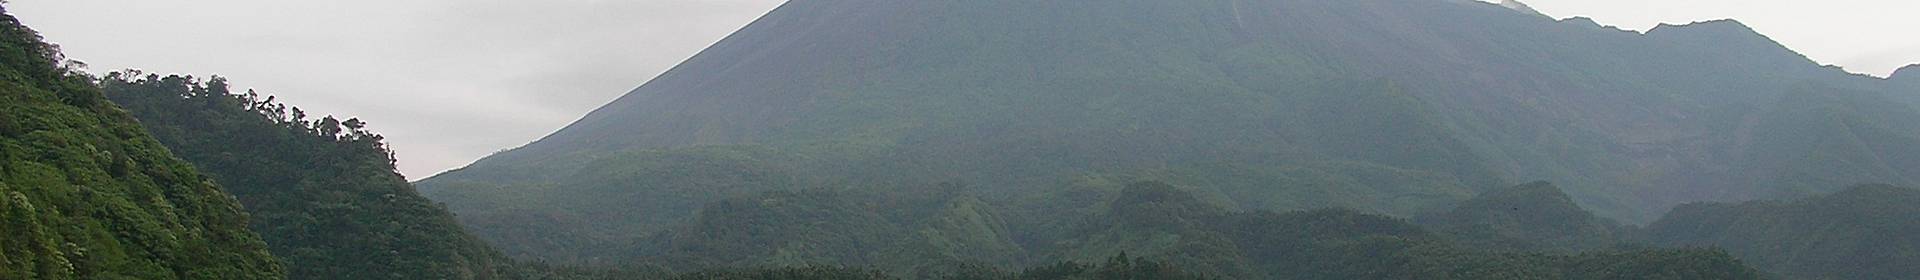 Merapi Volcano